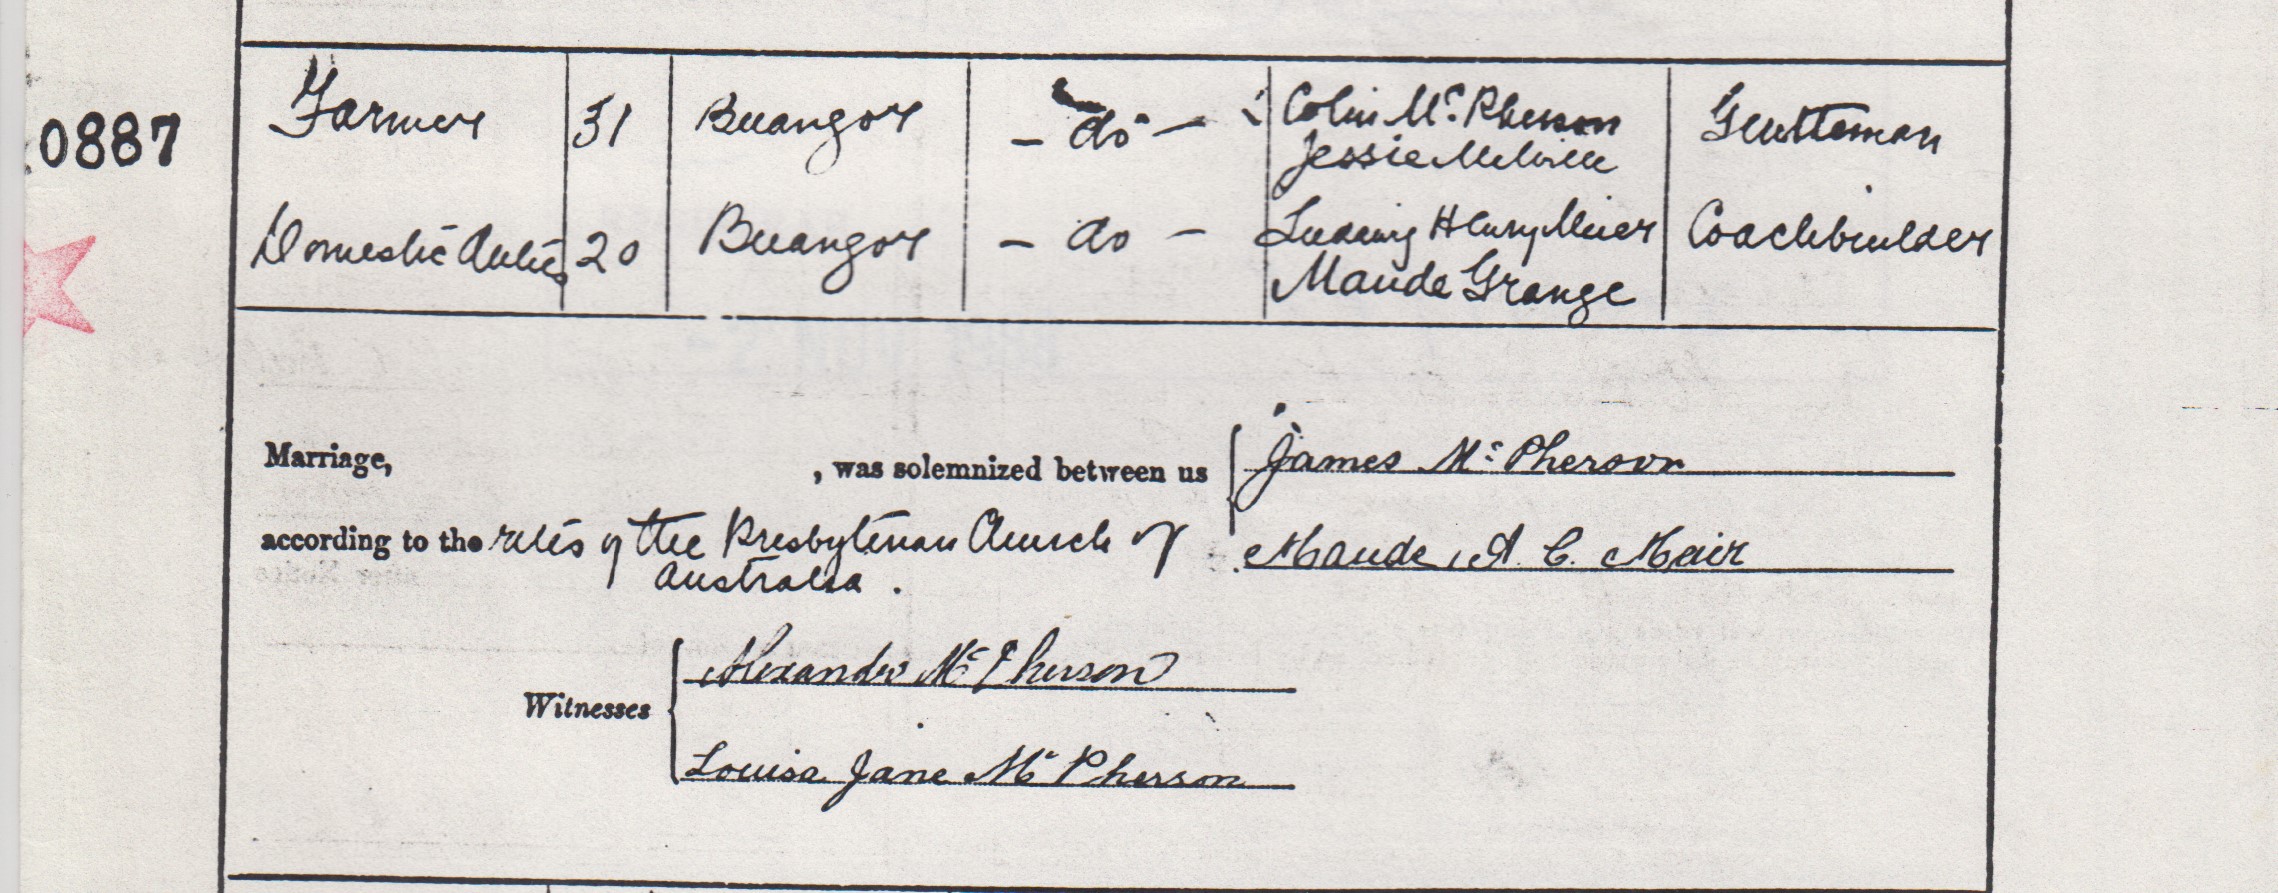 James McPherson marriage certificate part 2